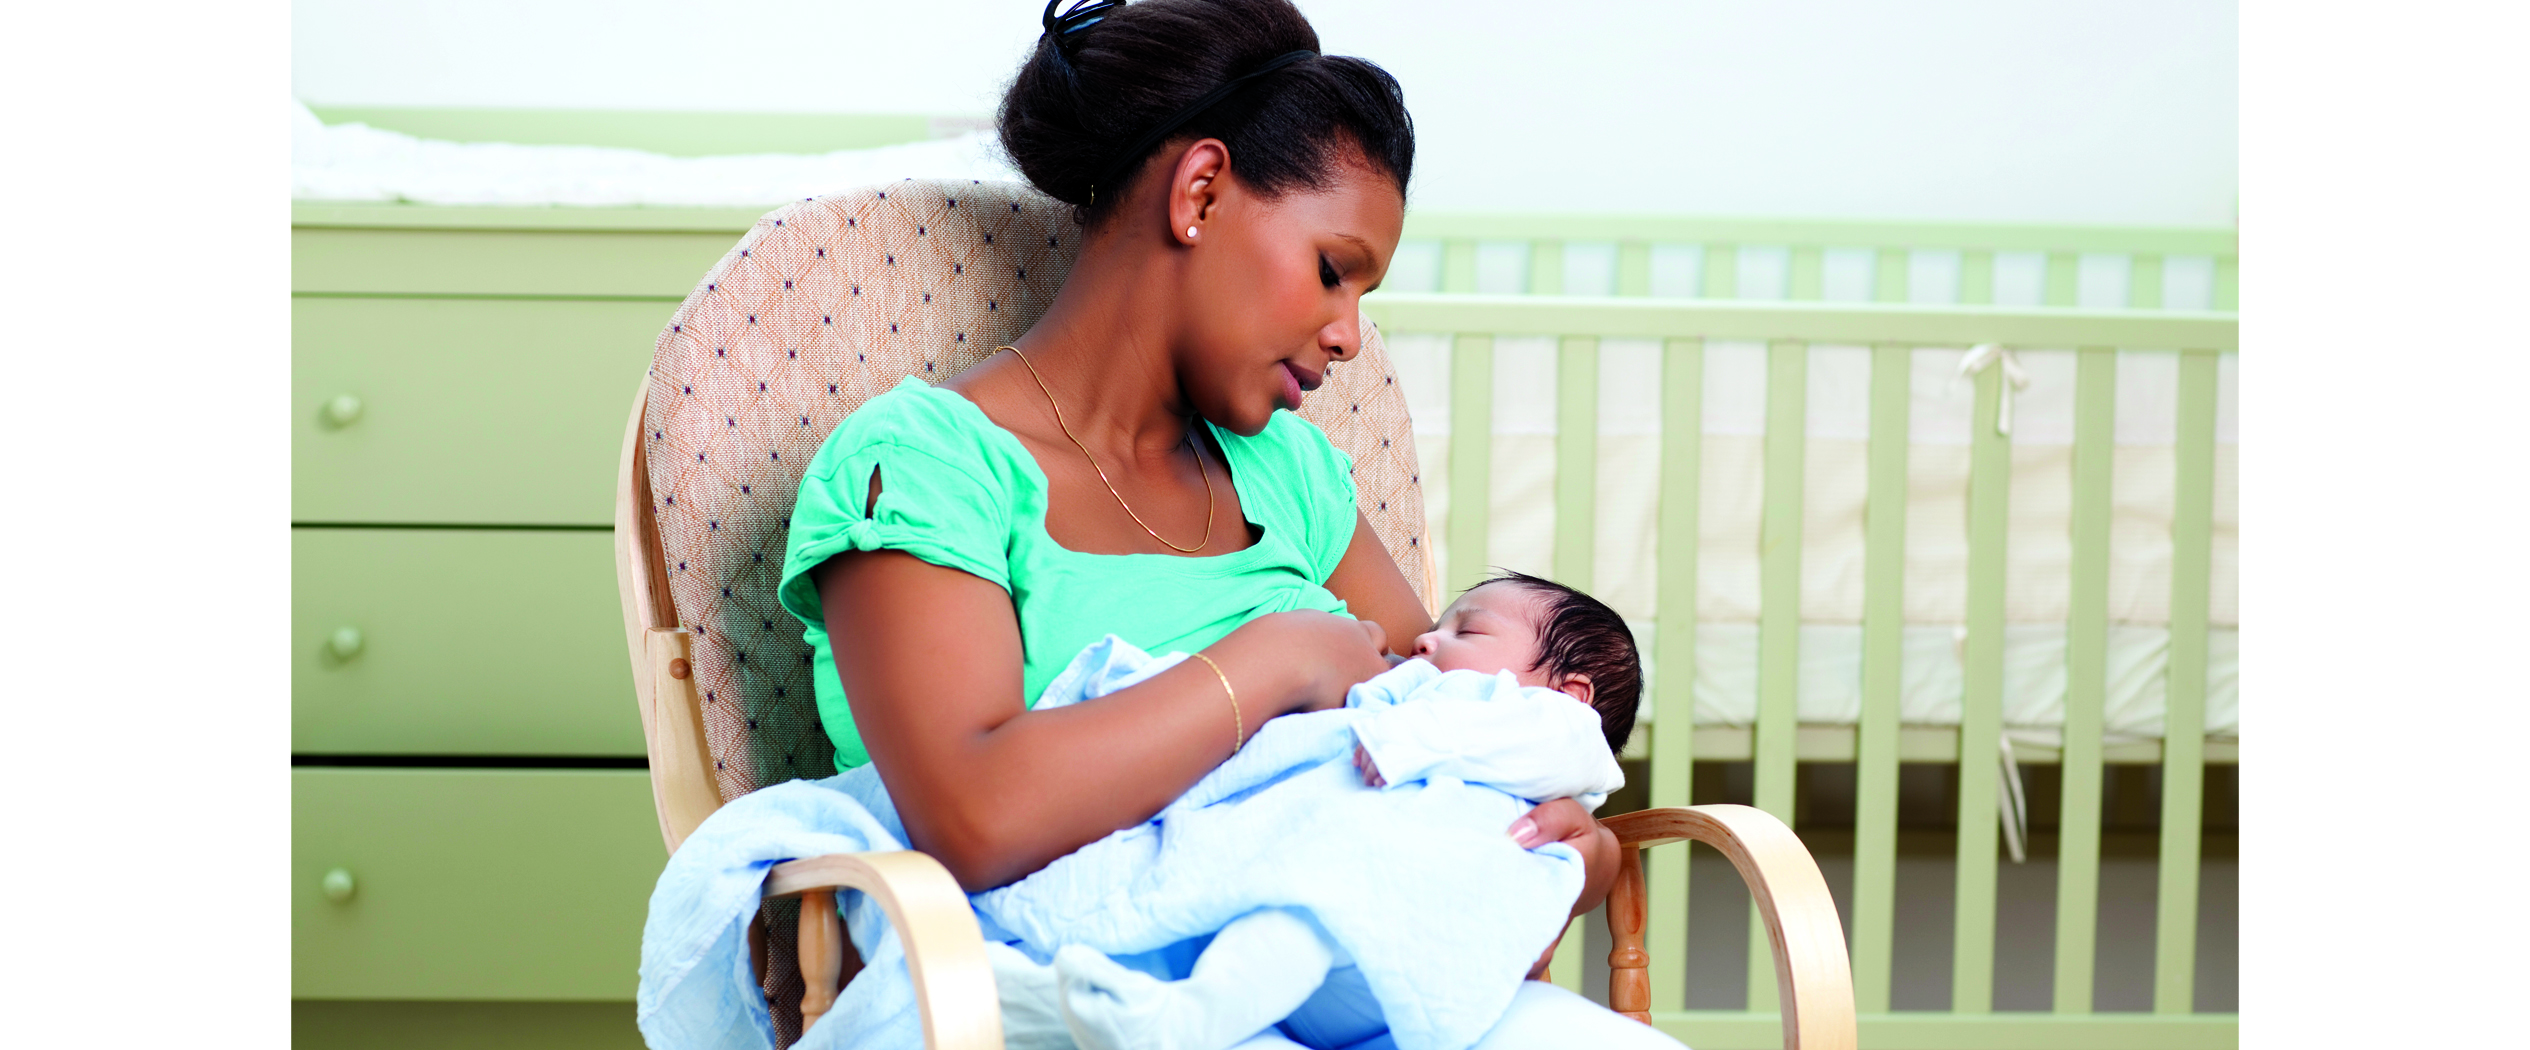 Breastfeeding benefits moms and babies